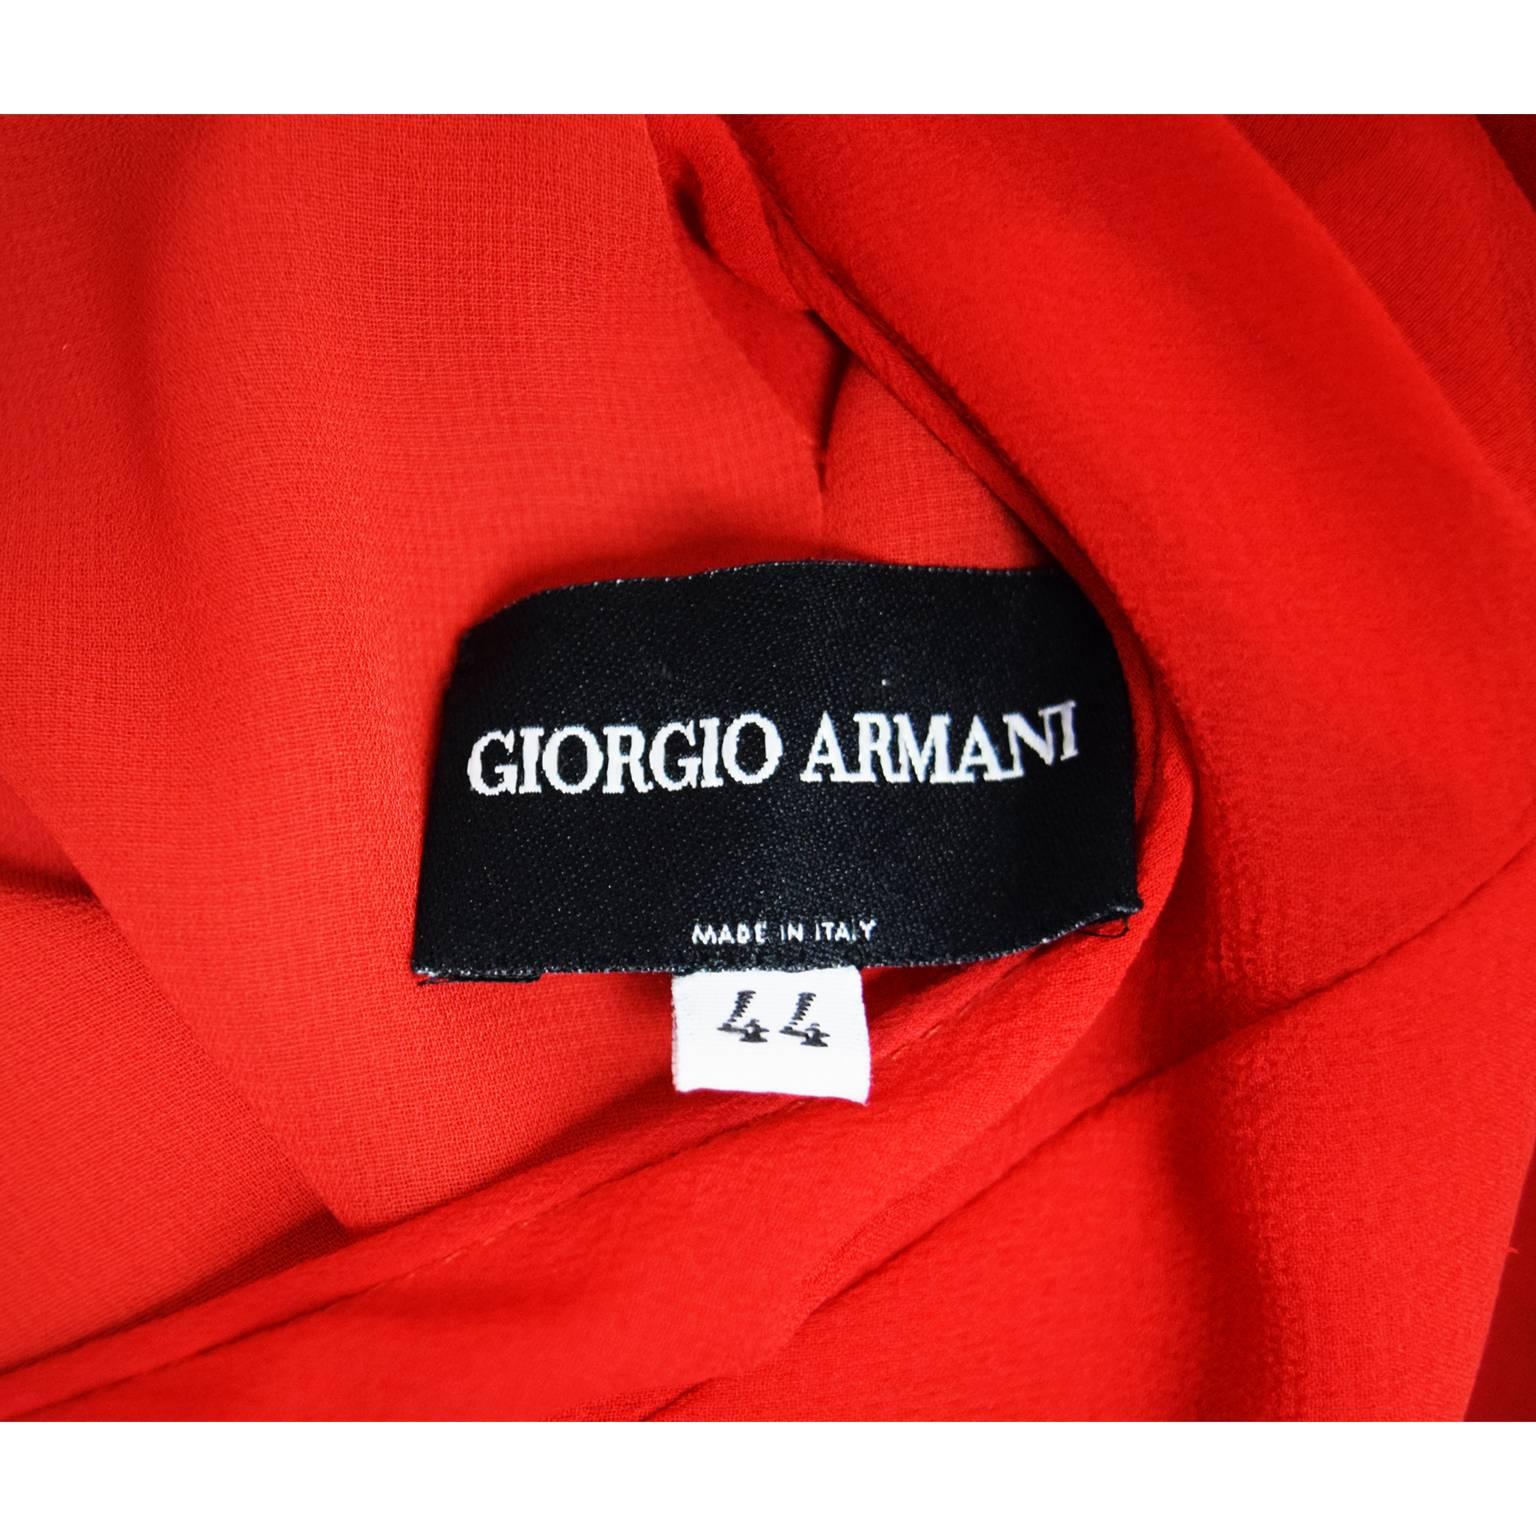 Giorgio Armani Red Sheer Sheath Dress For Sale 3